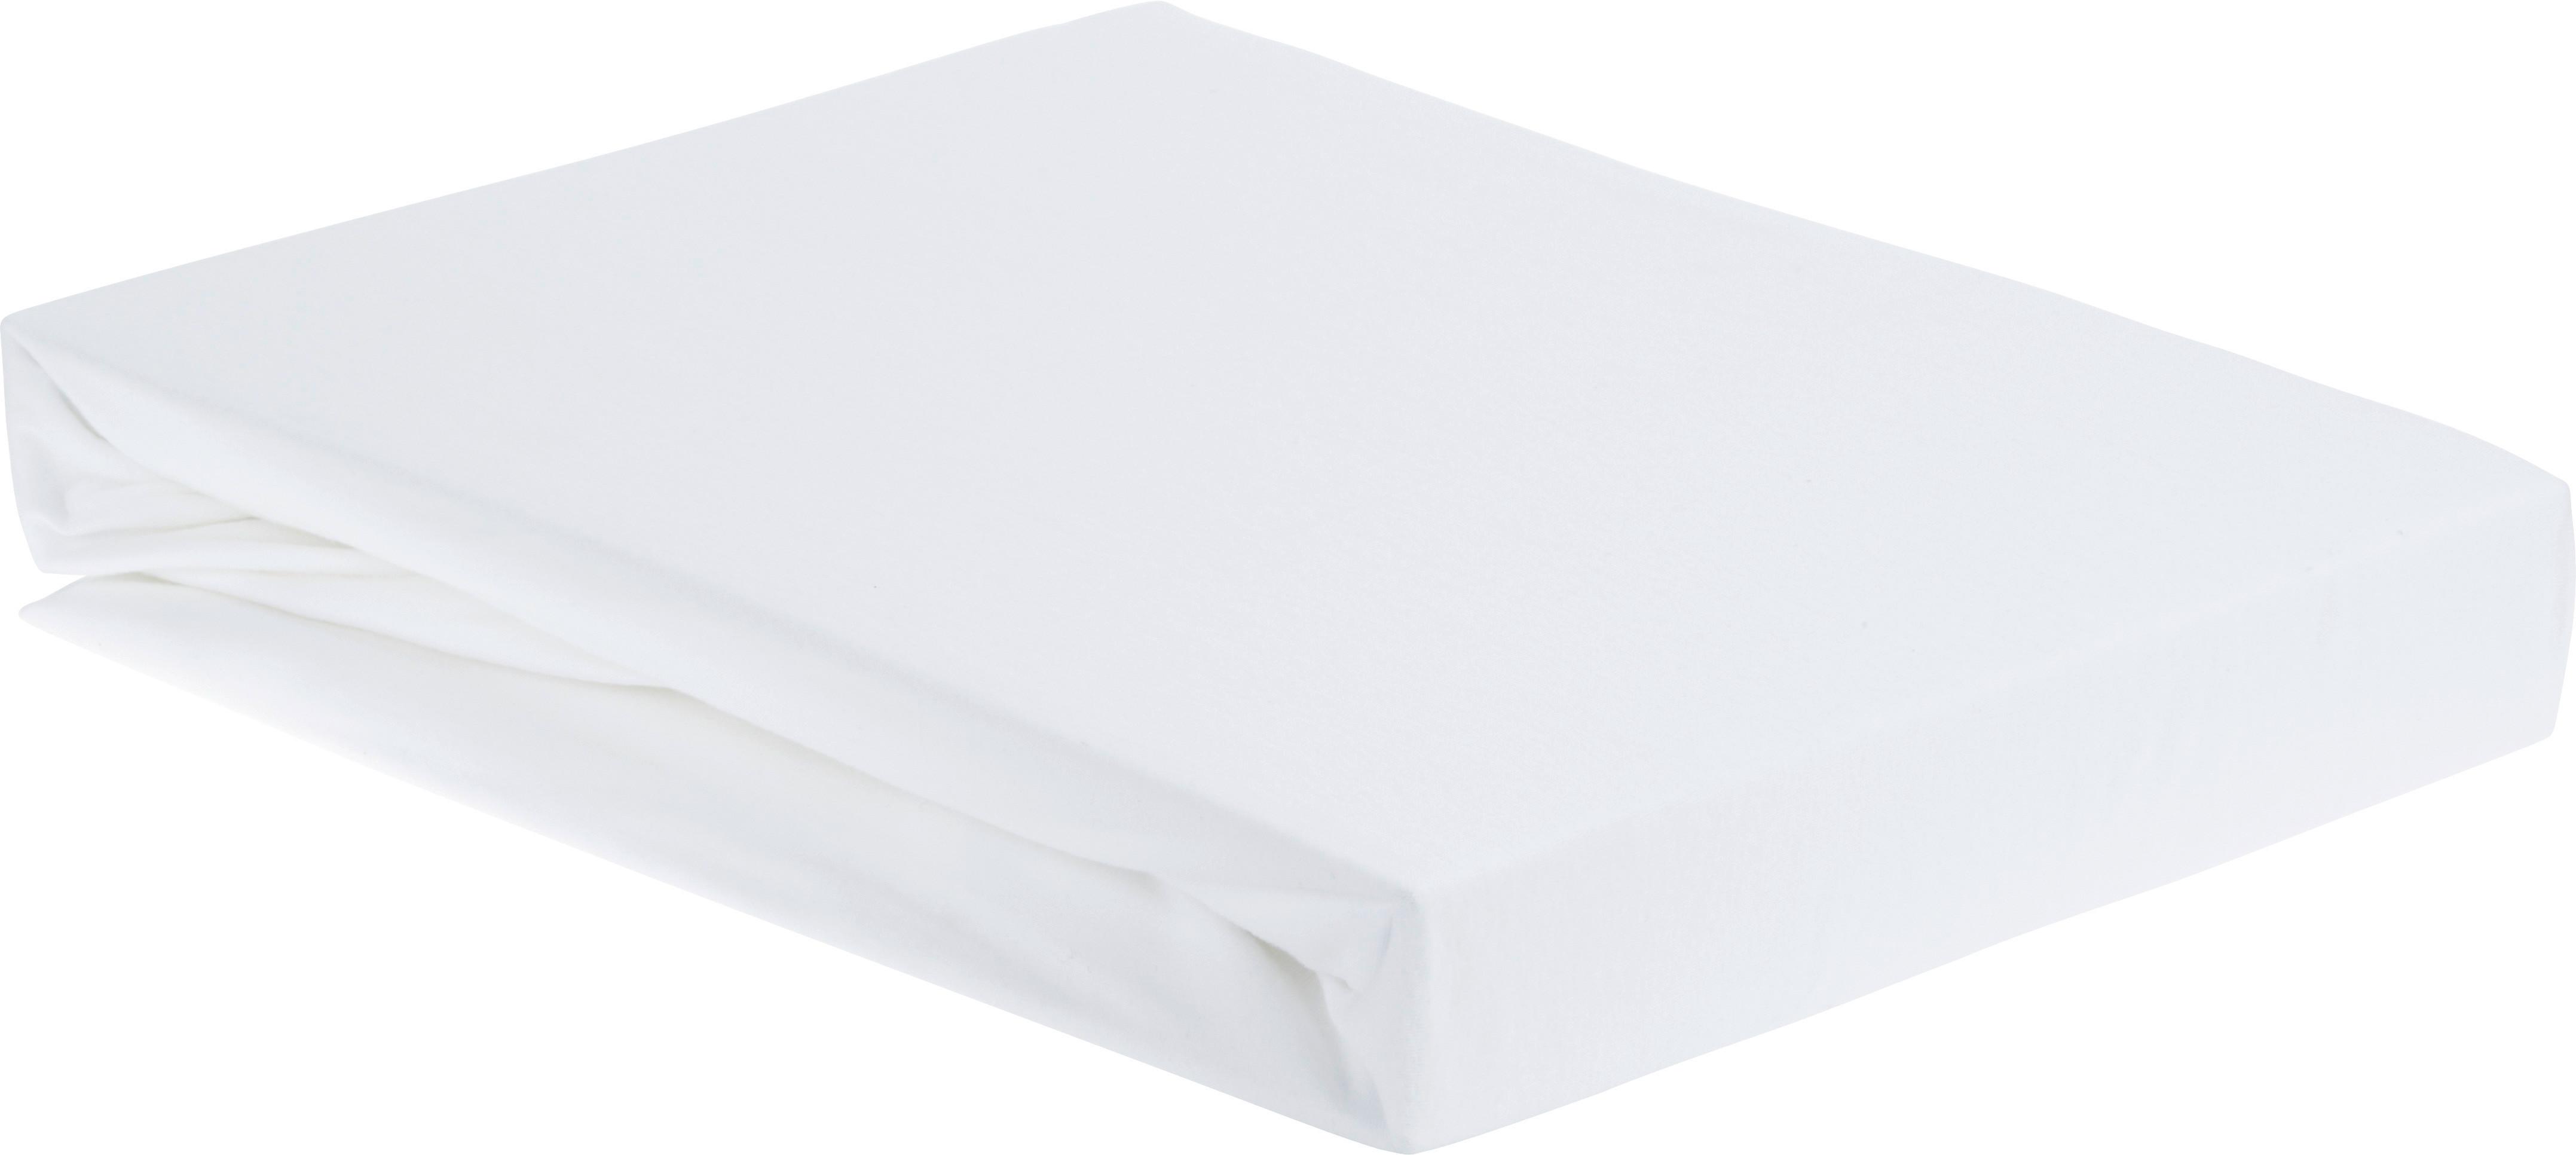 Cearșaf cu elastic Elasthan - alb, textil (150/200/28cm) - Premium Living